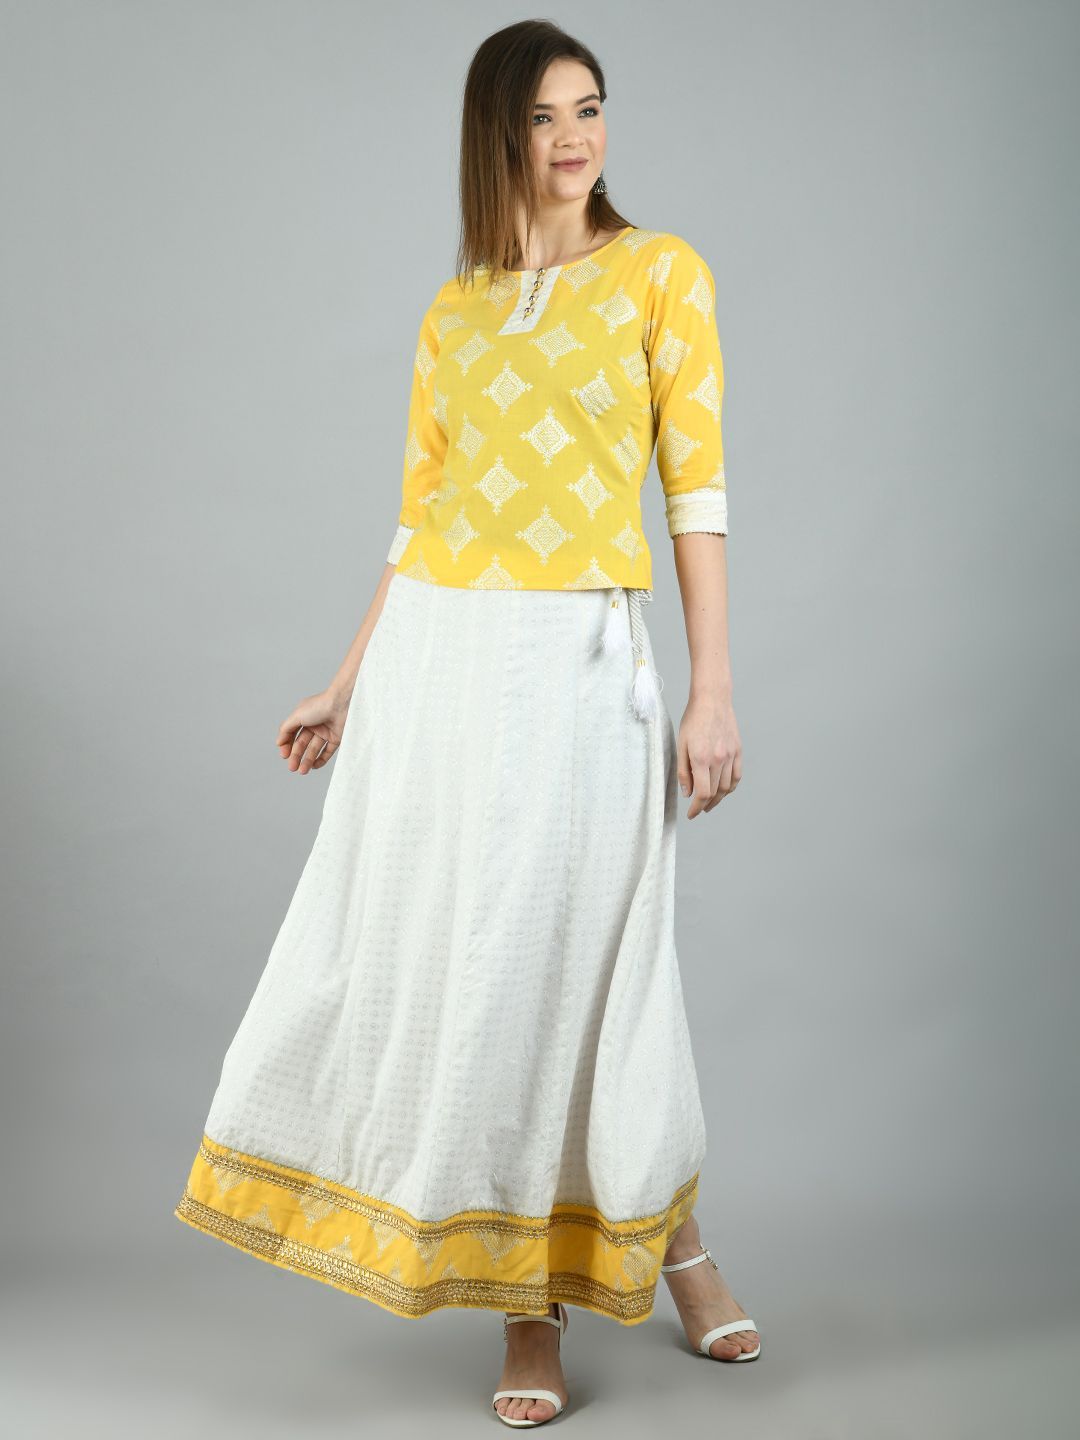 Women's Yellow Cotton Printed 3/4 Sleeve Round Neck Casual Lehenga Choli Set - Myshka